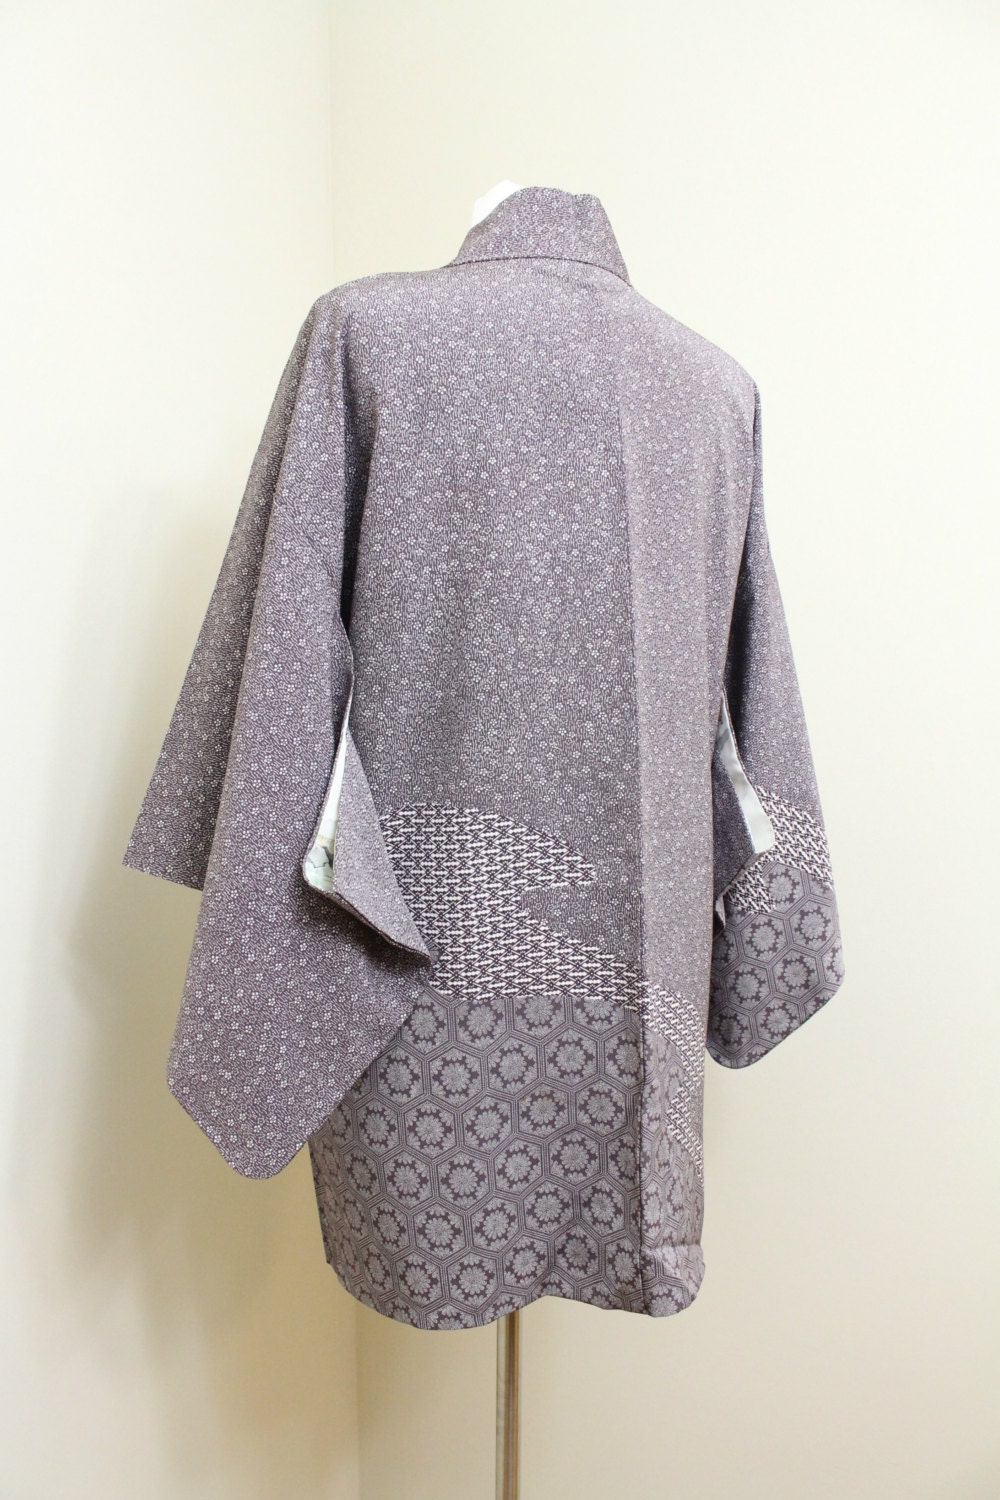 Japanese Haori Jacket. Vintage Silk Coat Worn Over Kimono. Purple ...